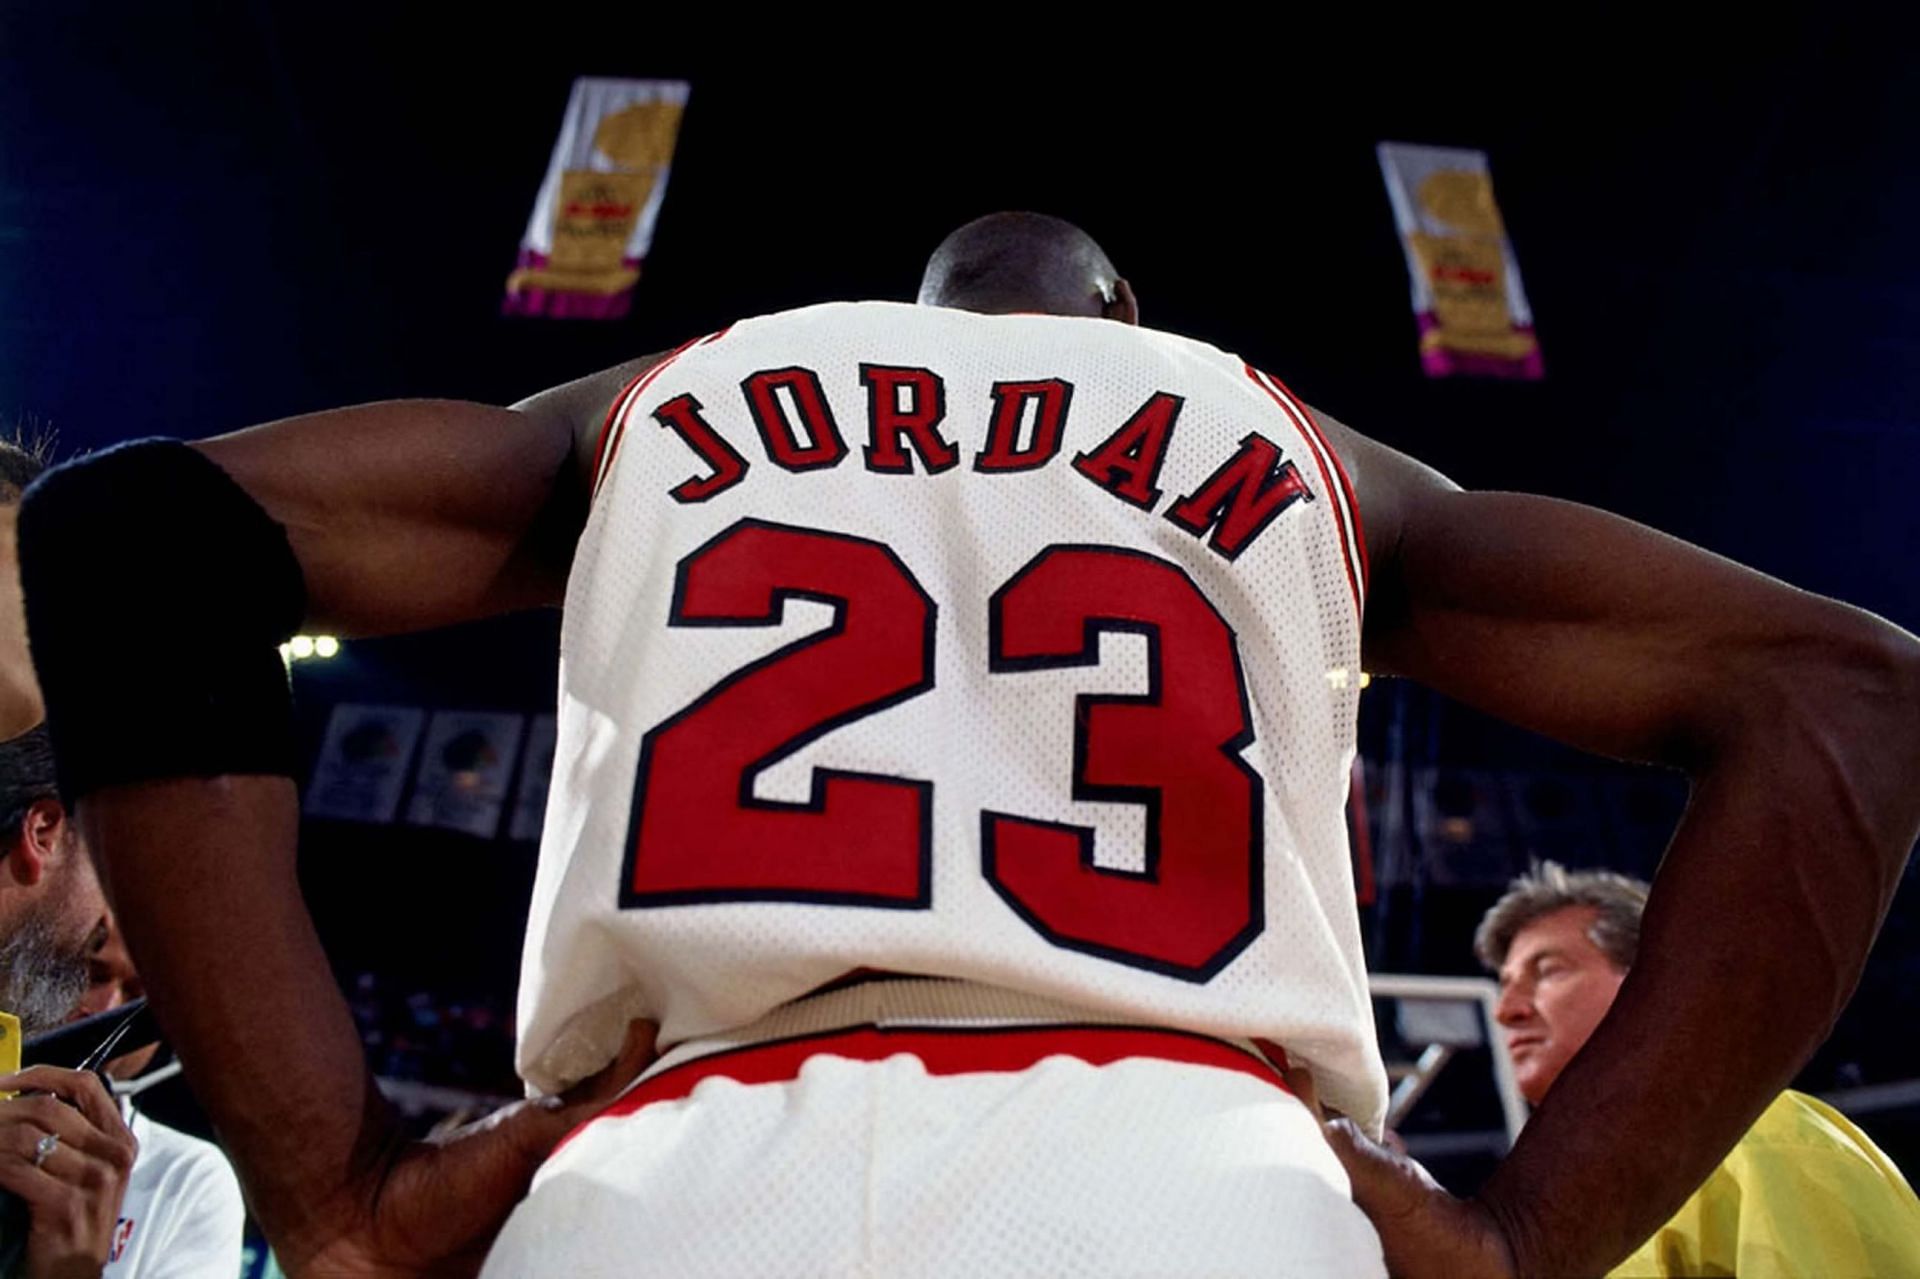 Michael Jordan starred with the Chicago Bulls.